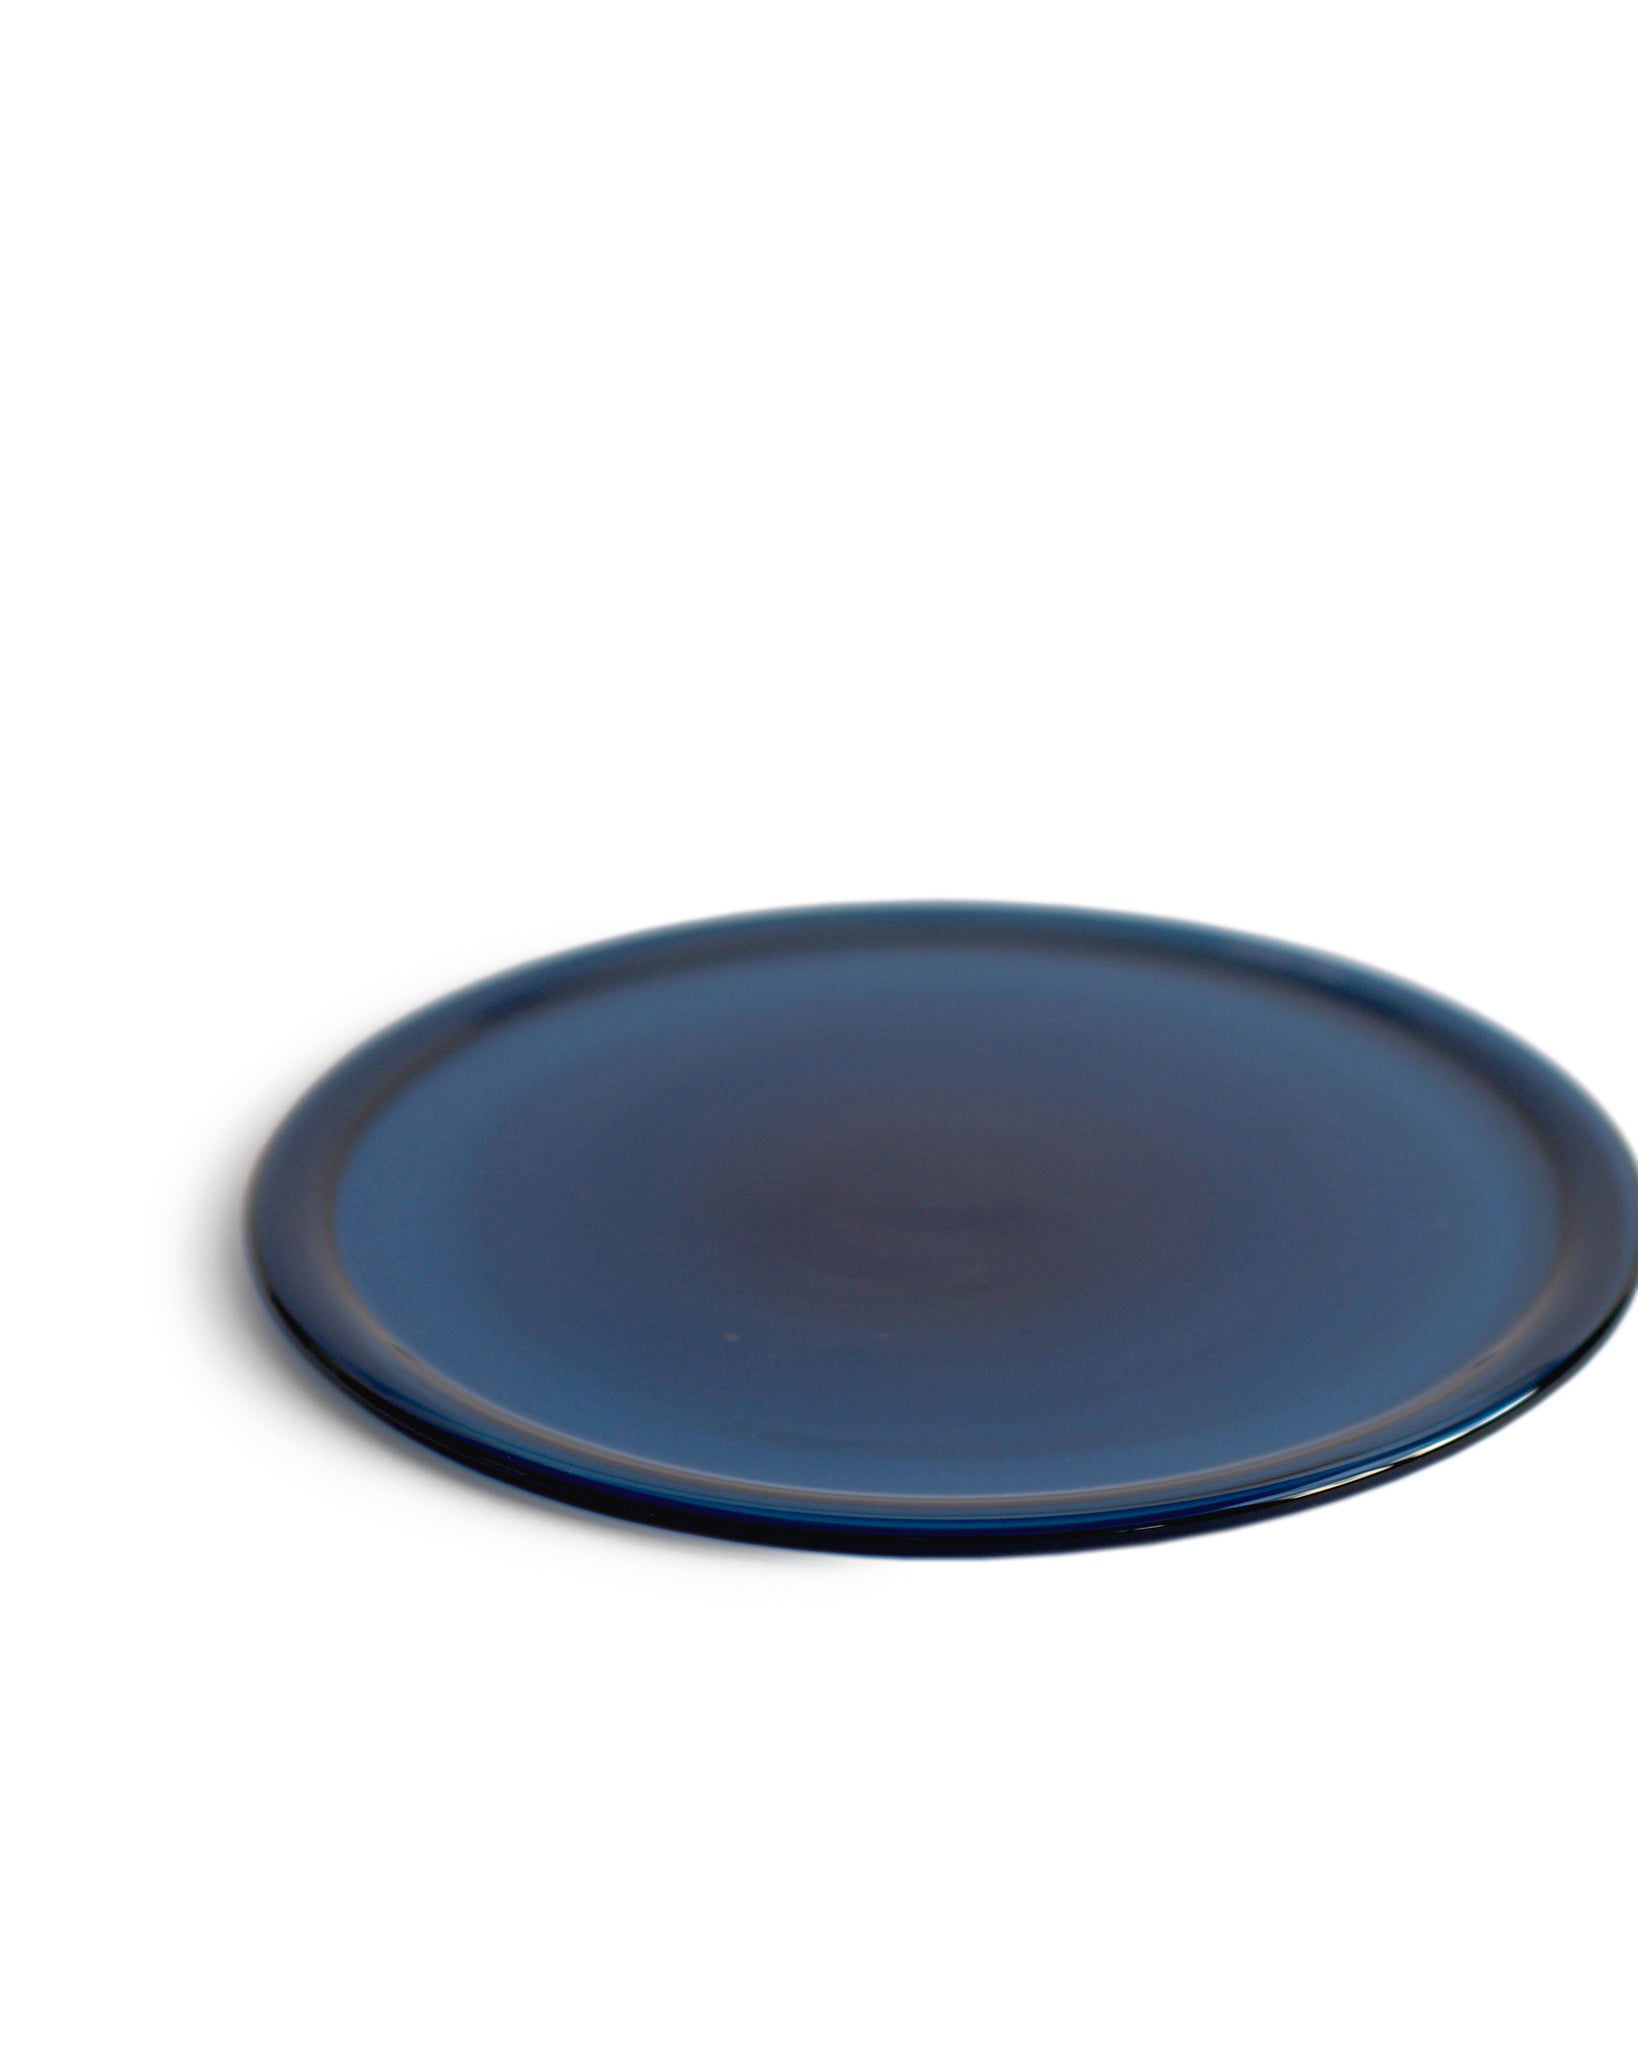 Silhouetted reclaimed blue folded rim plate in dark blue against white background. 